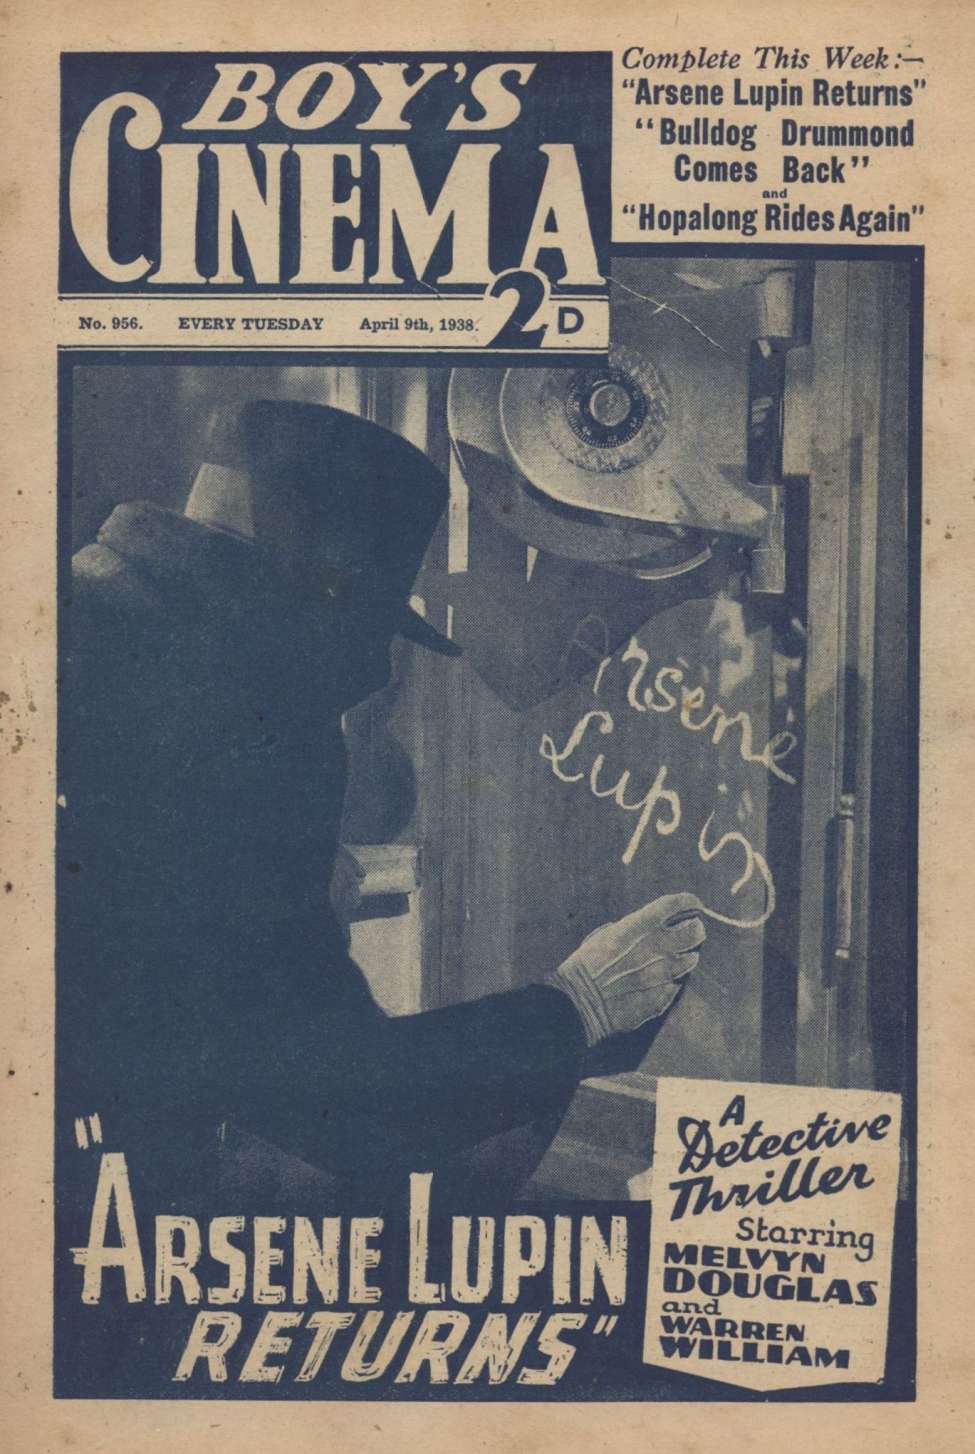 Book Cover For Boy's Cinema 956 - Arsene Lupin Returns - Melvyn Douglas